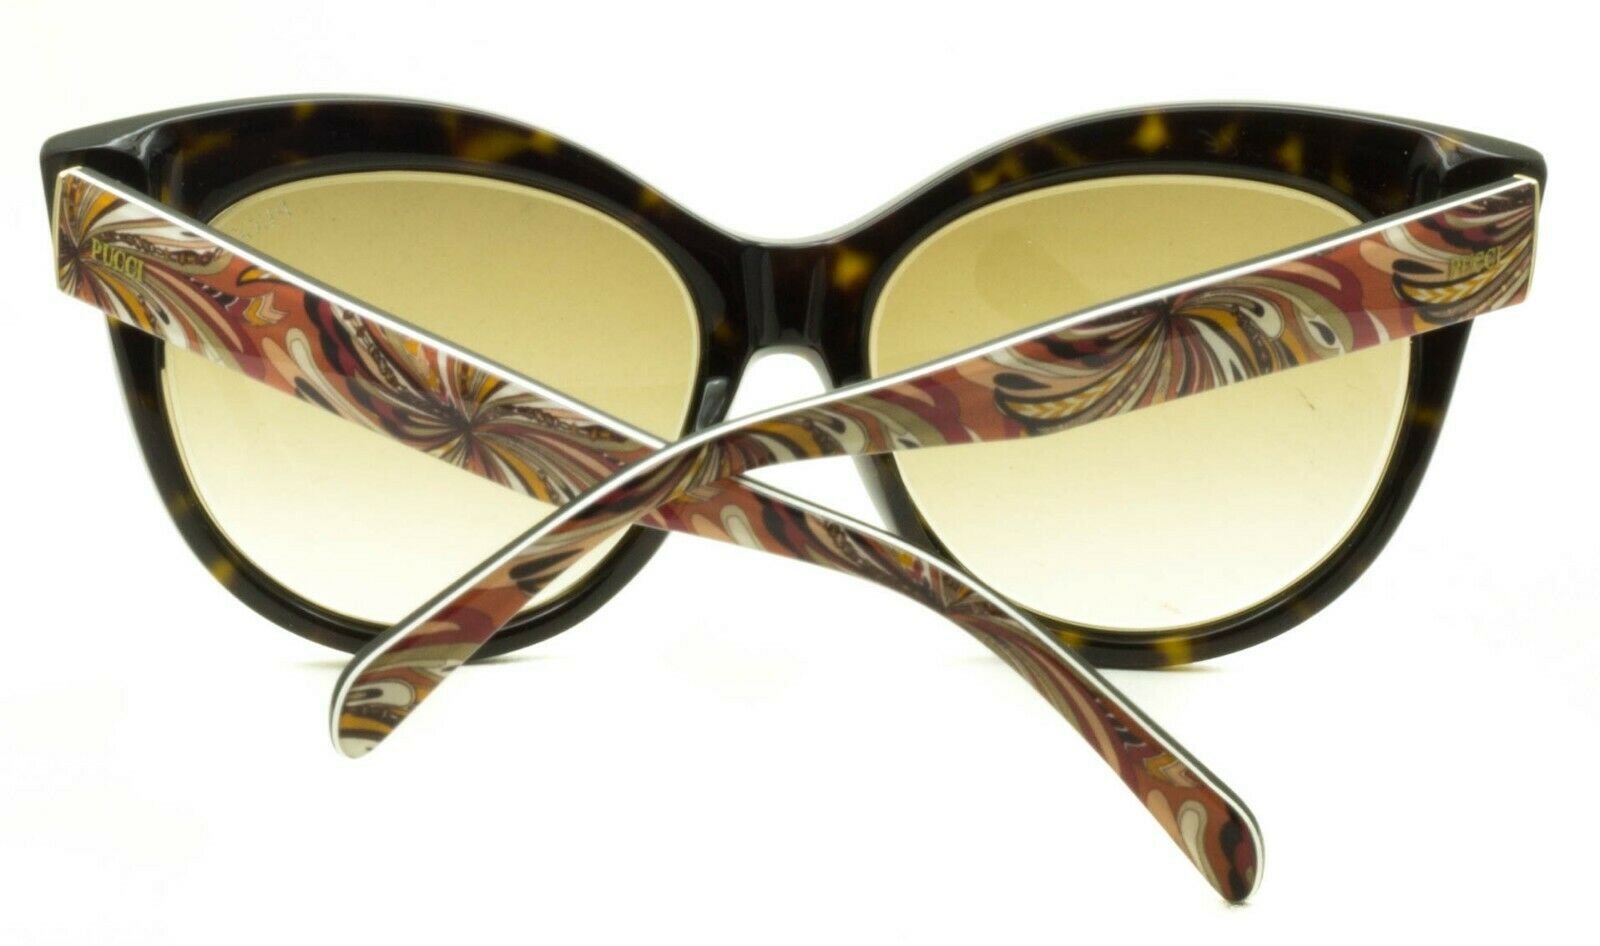 EMILIO PUCCI EP 24 56F 55mm Sunglasses Shades Eyeglasses Glasses Italy - New